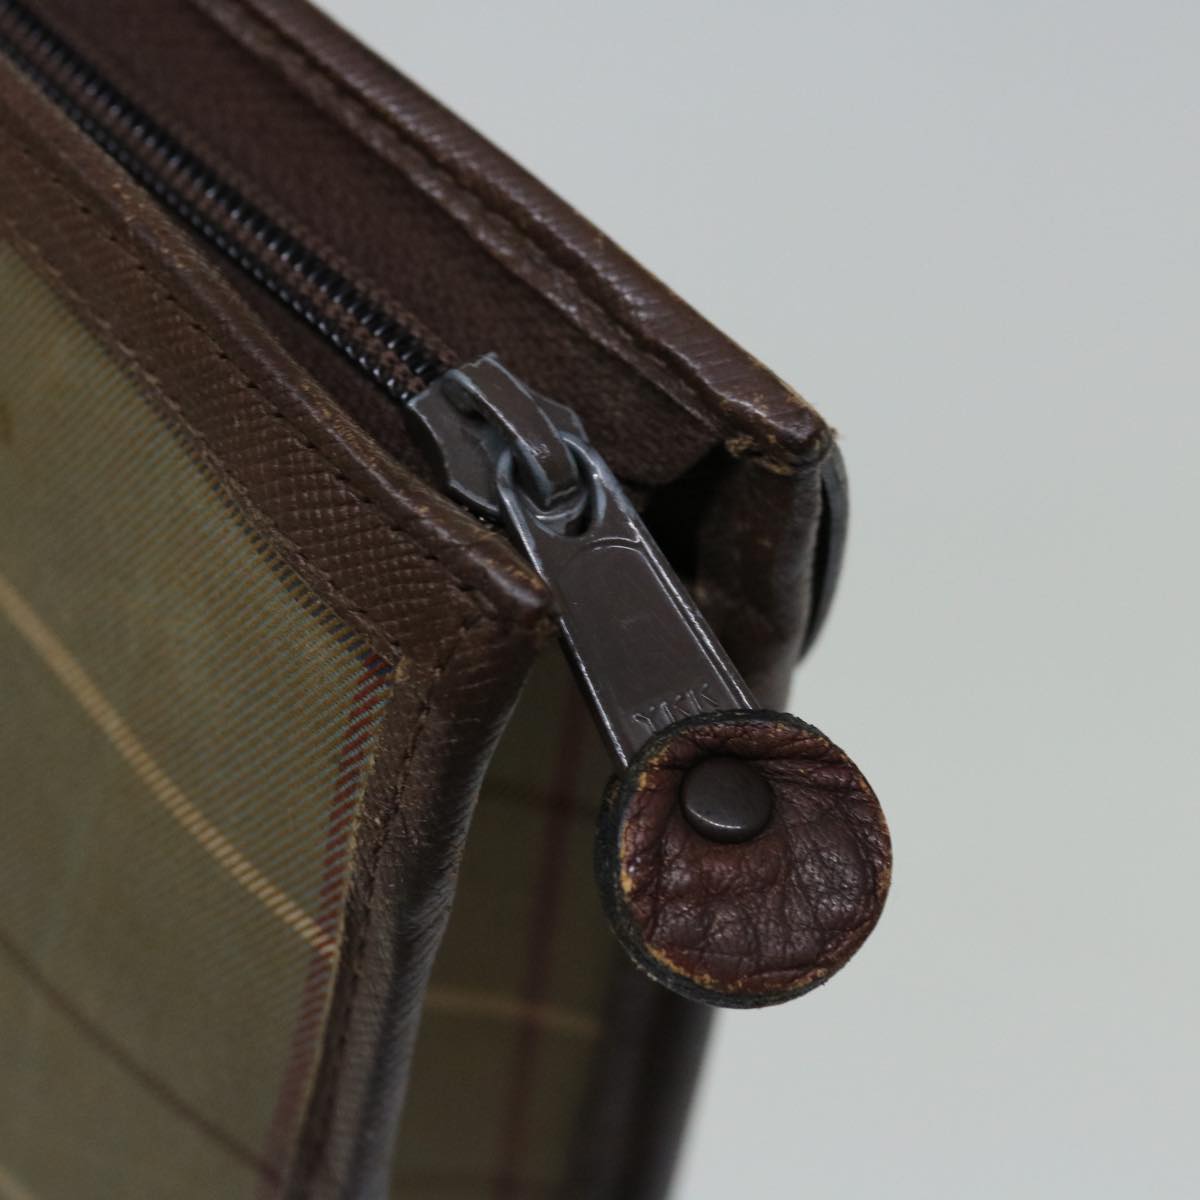 Burberrys Nova Check Clutch Bag Canvas Brown Auth bs12054